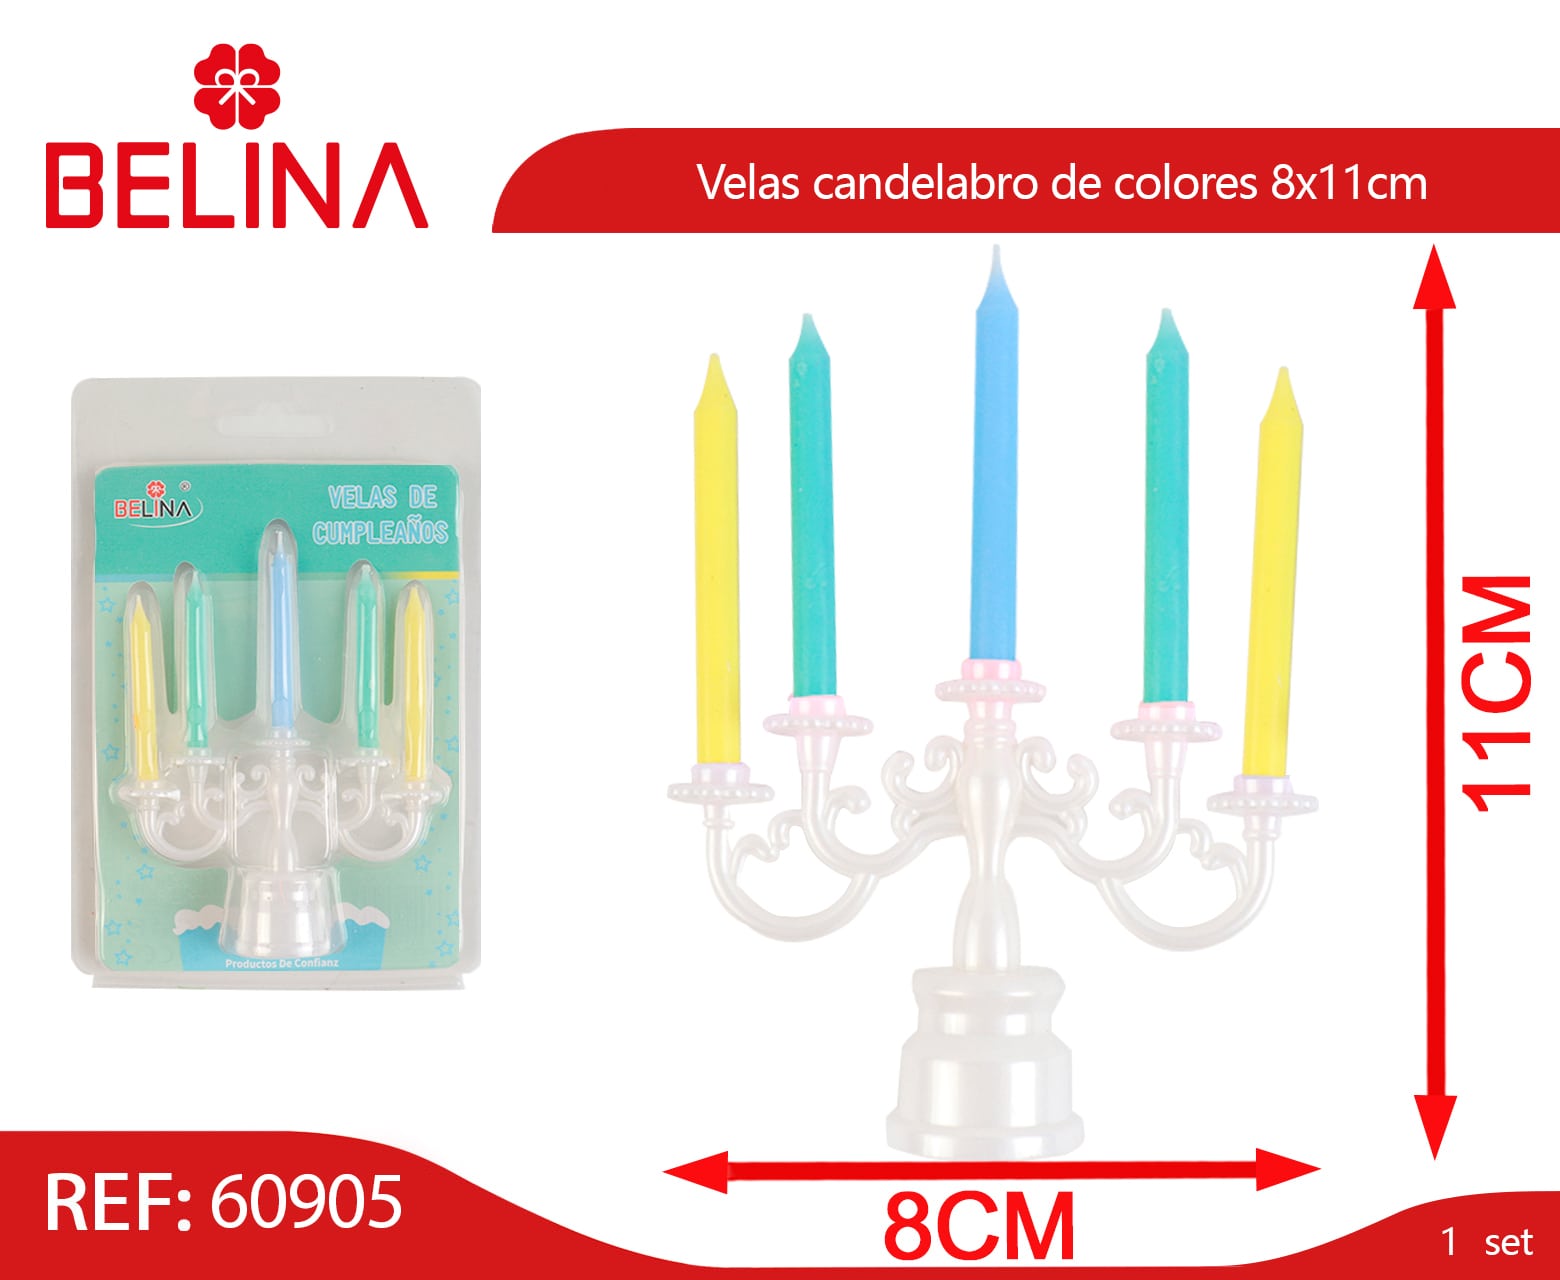 Velas candelabro de colores - Belina Cotillón